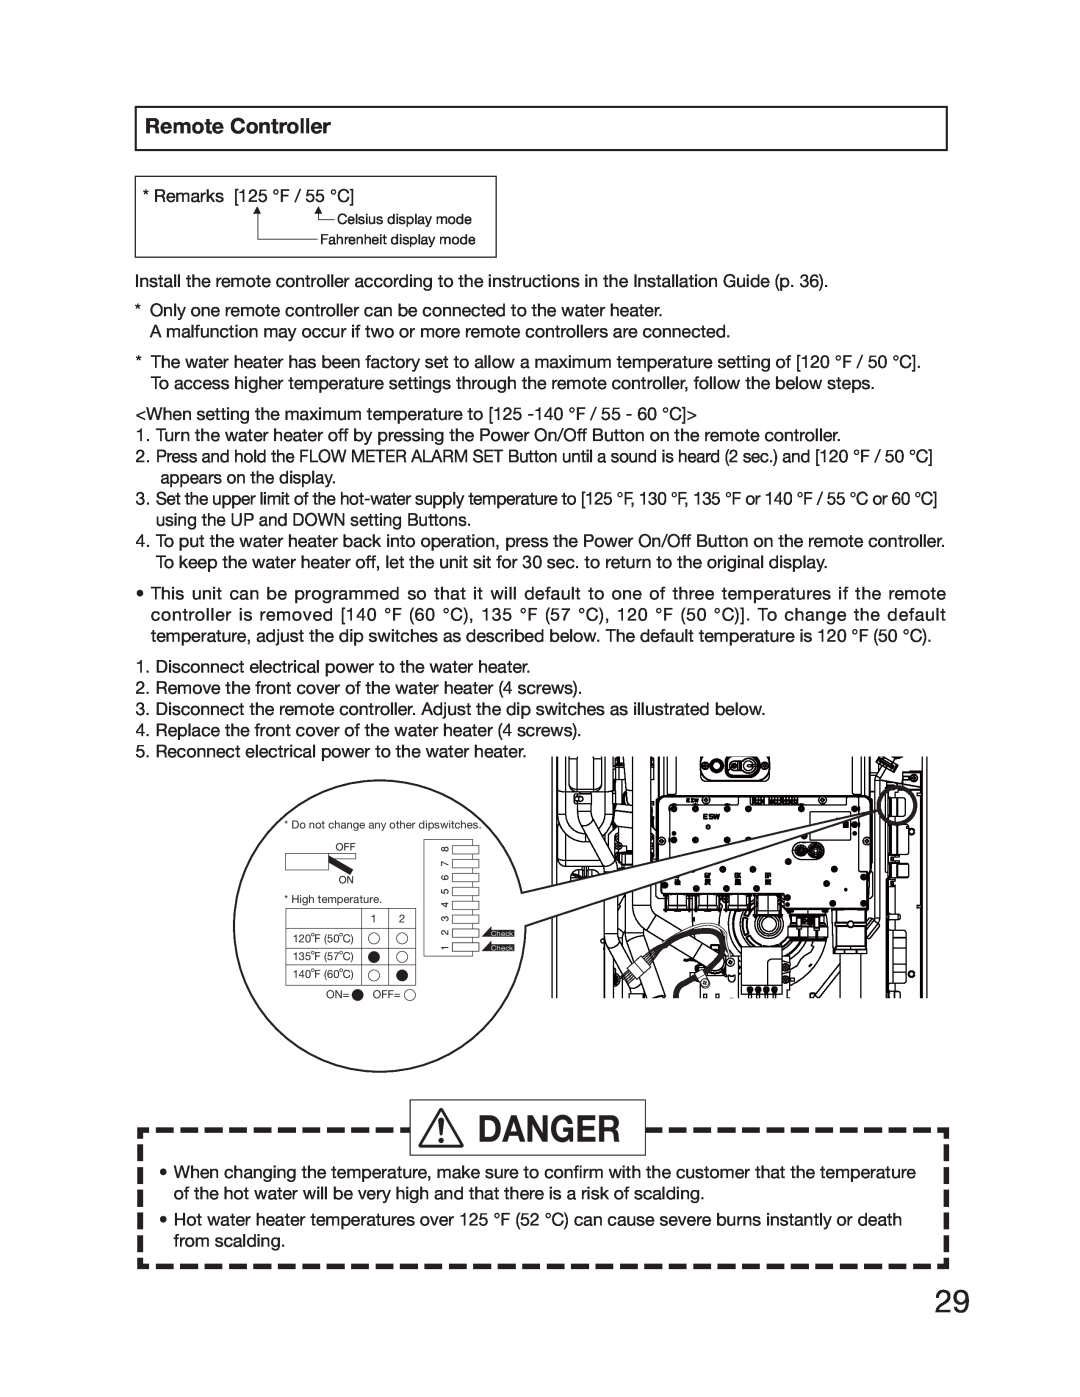 Electrolux 5995615357 installation manual Remote Controller, Danger 